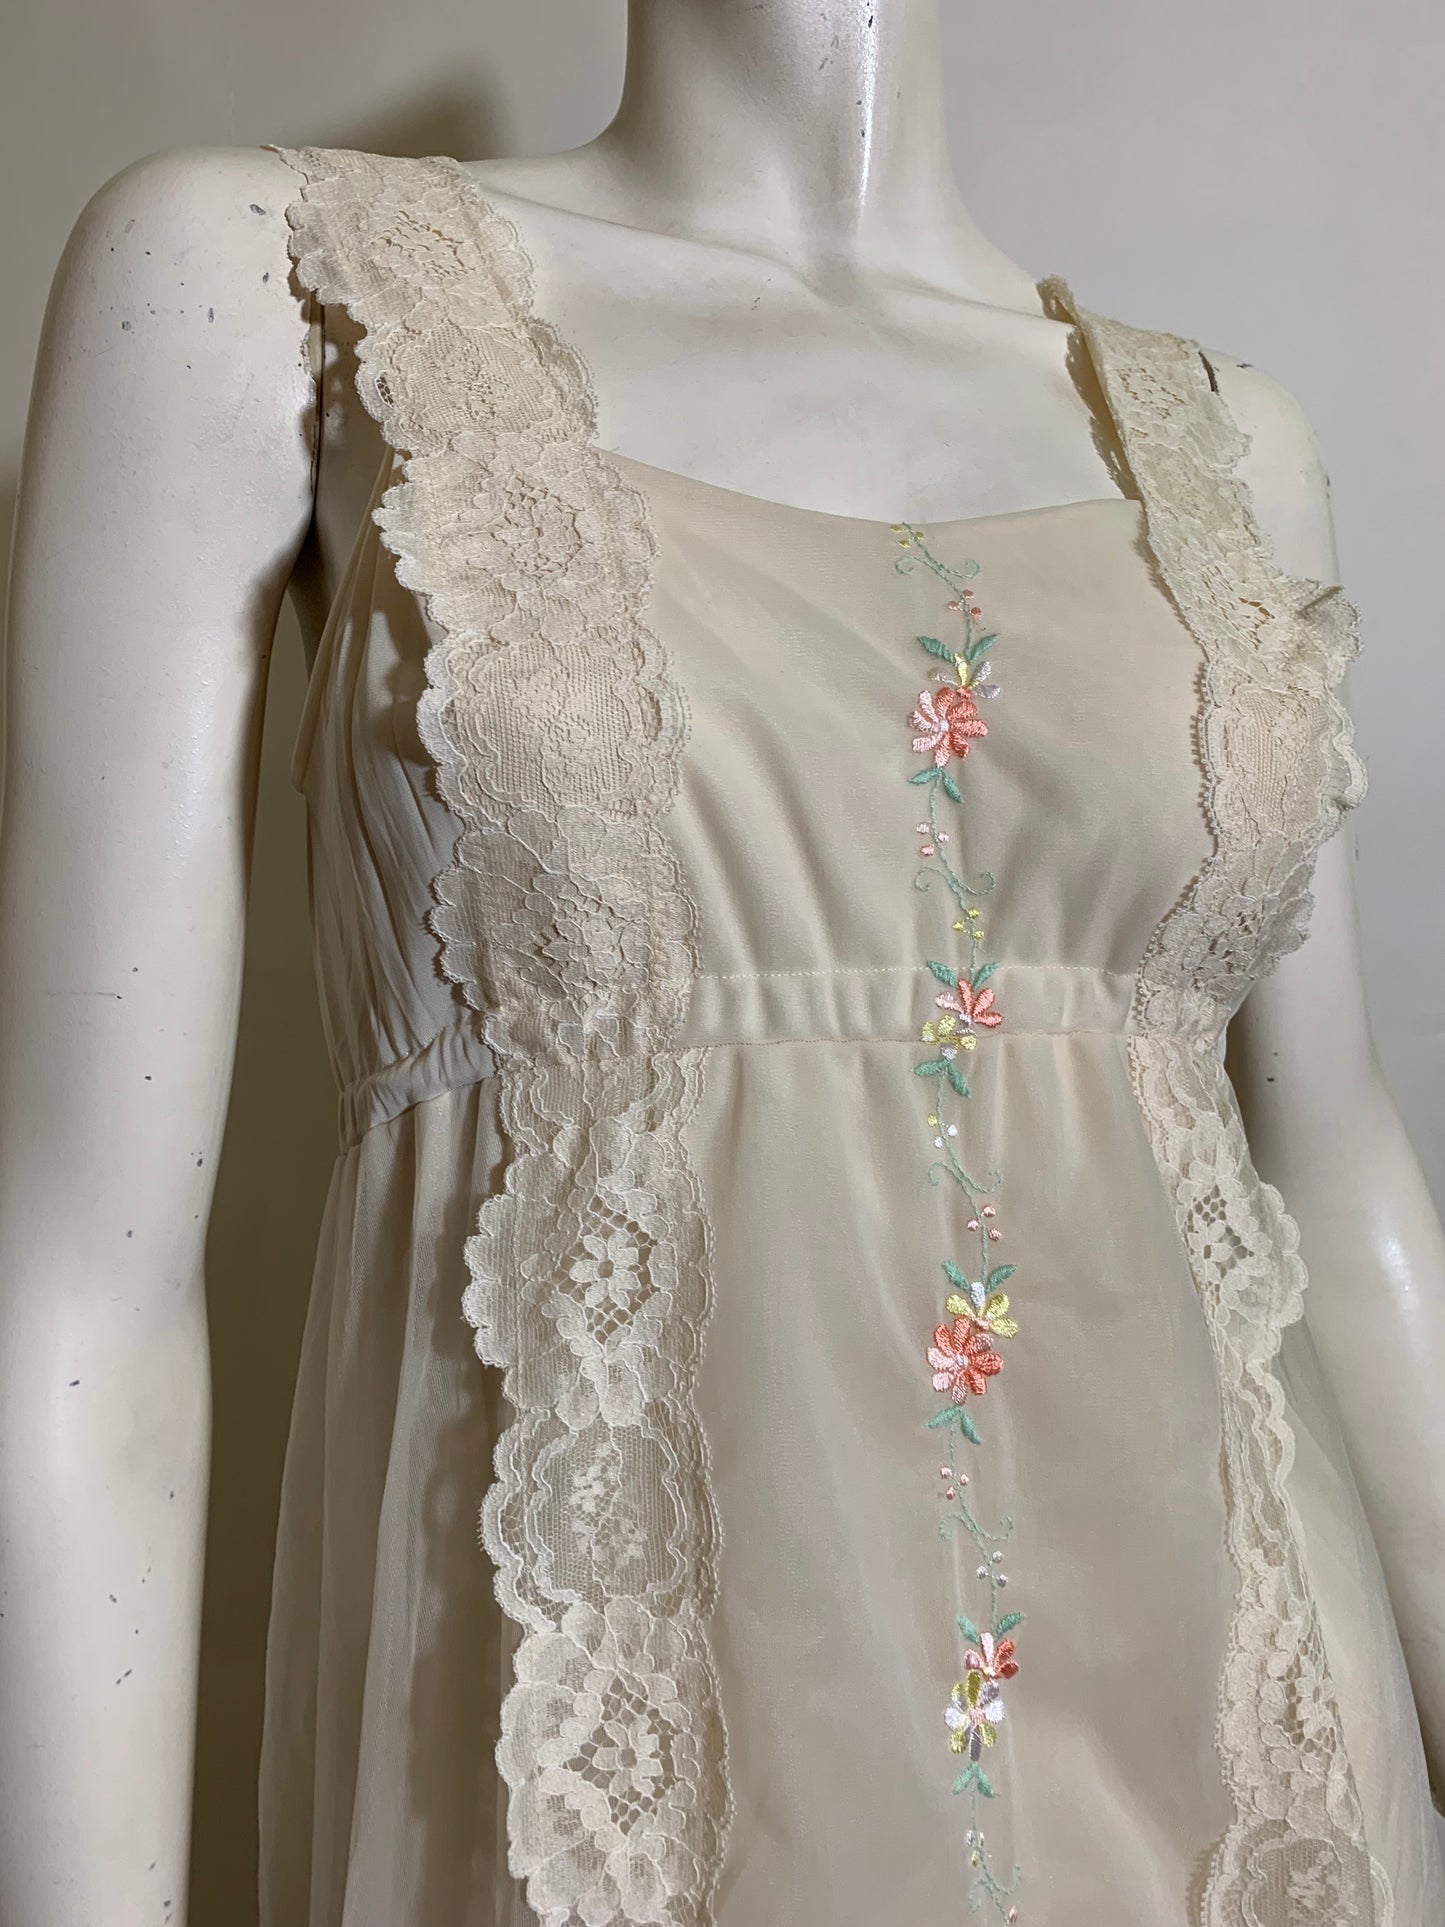 The Bridgerton- Peach Lace Front Empire Waist Nightgown circa 1970s